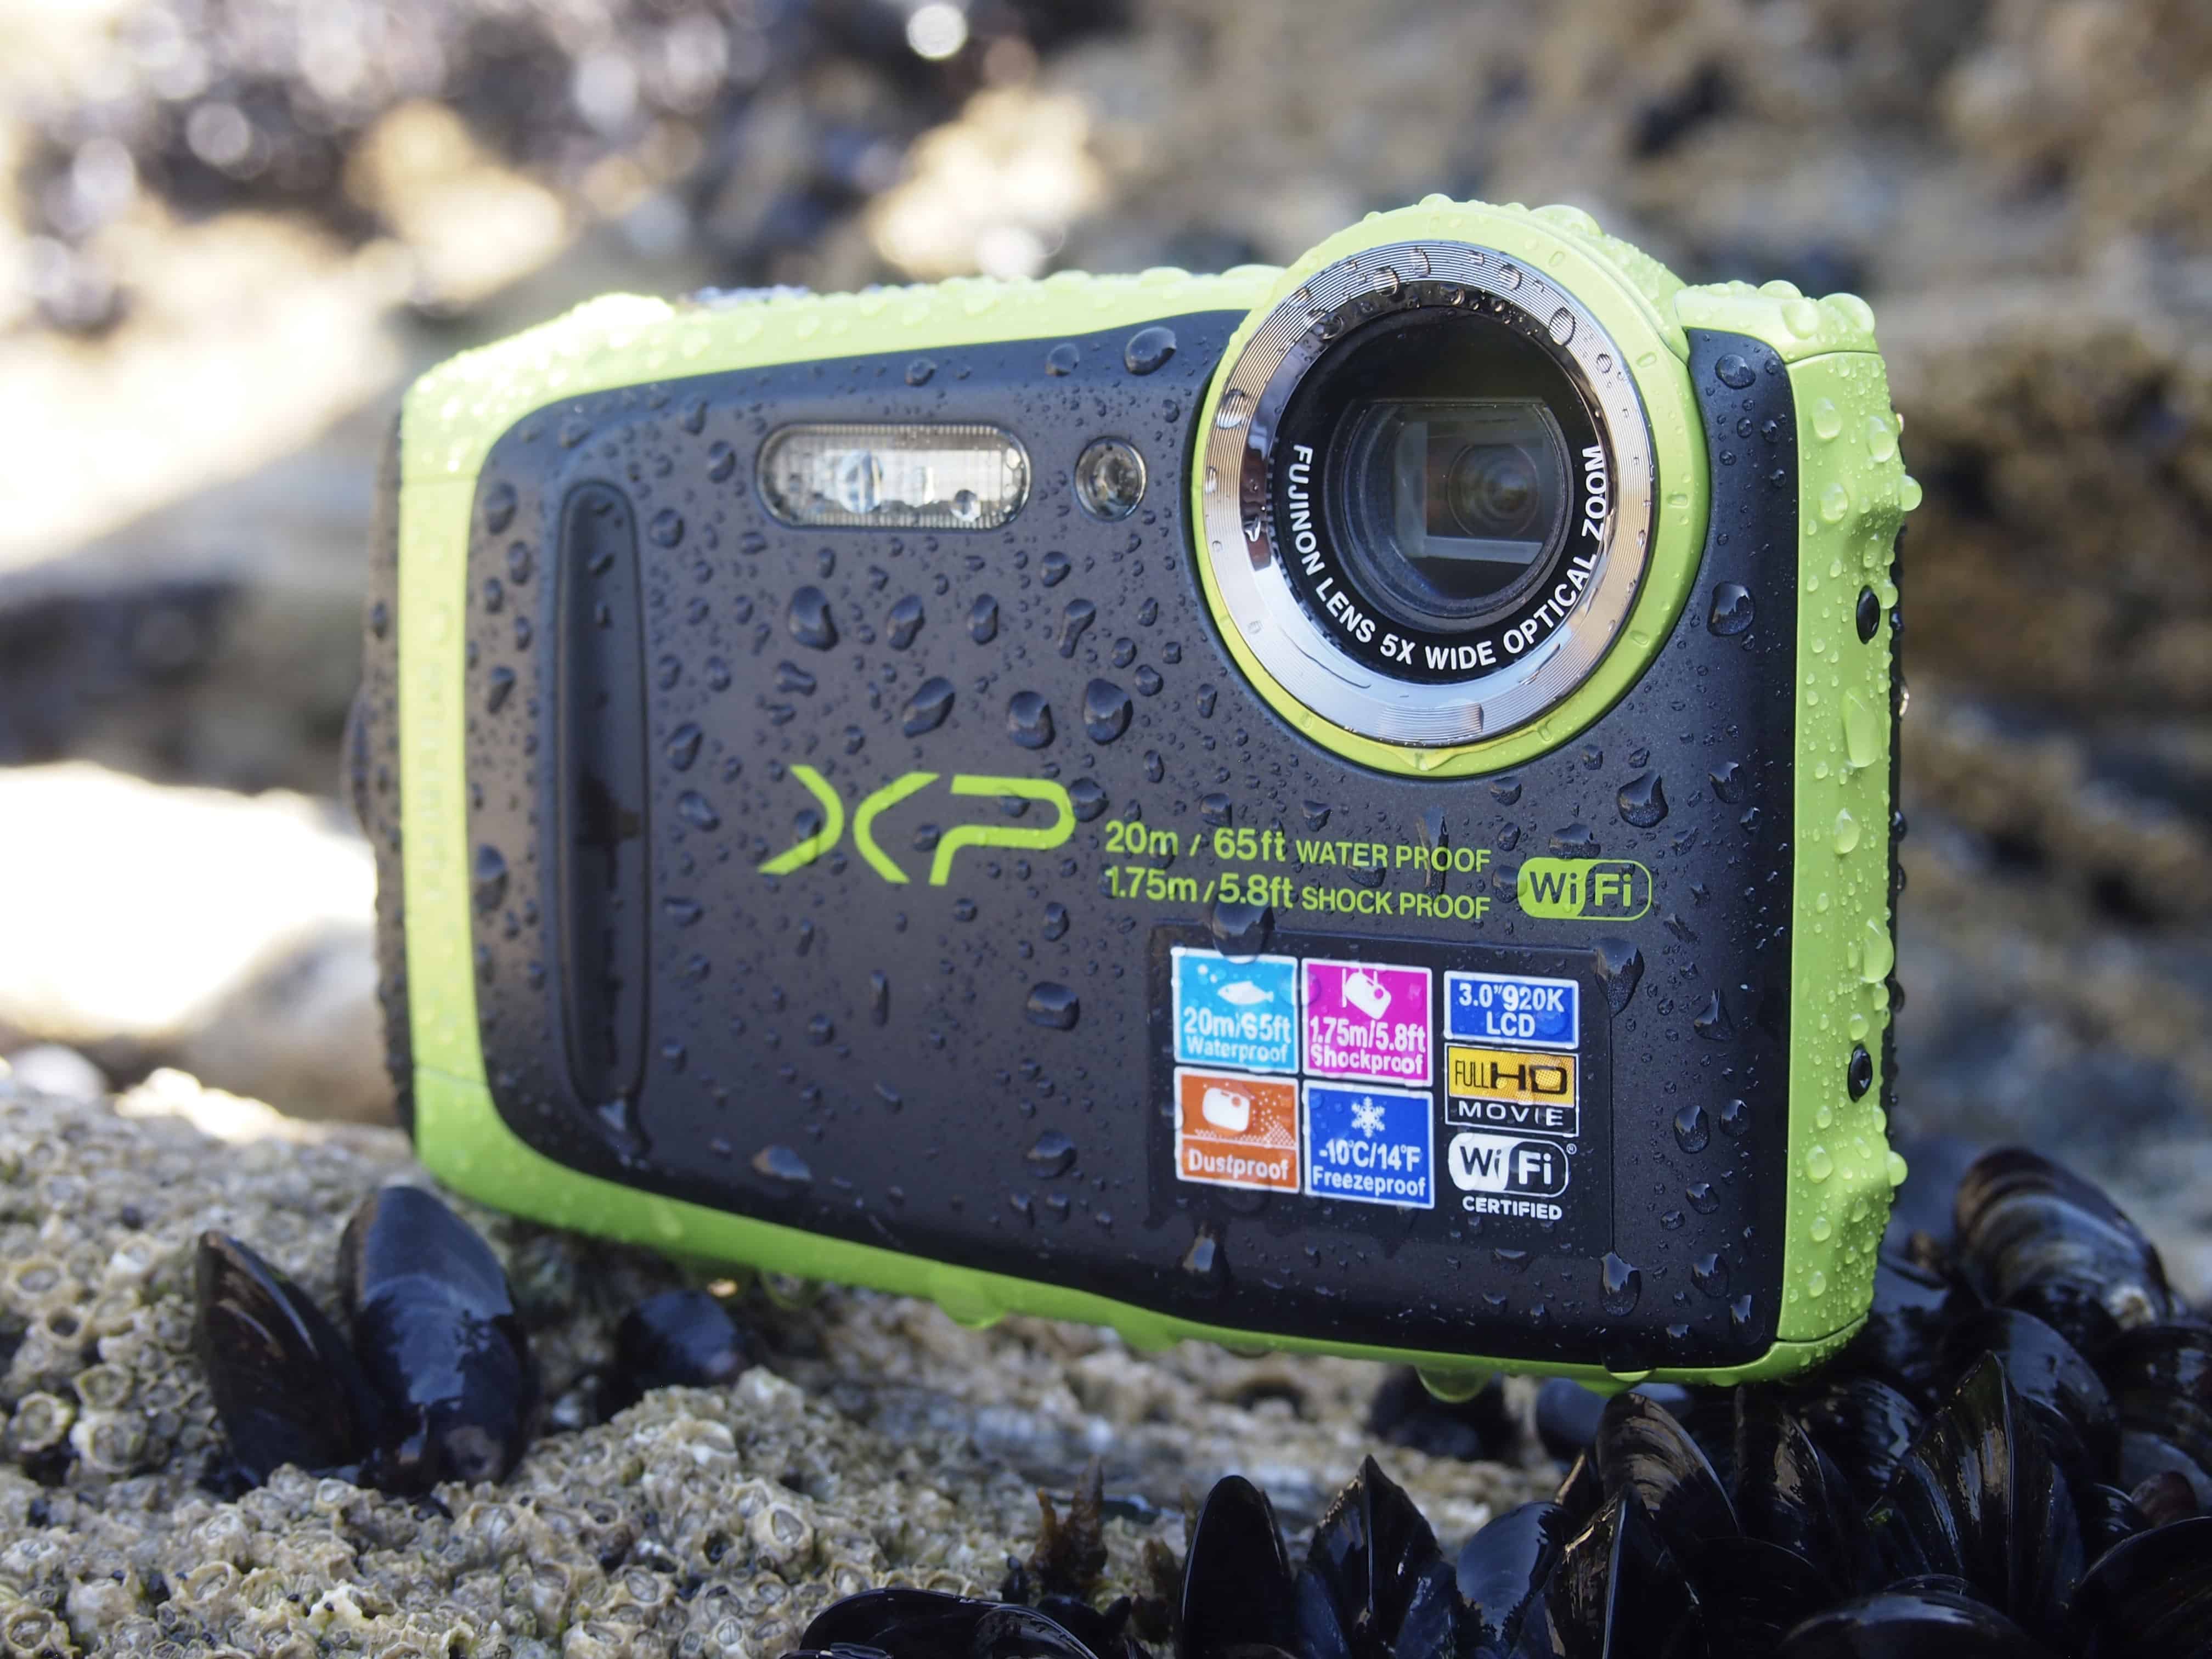 Fujifilm Finepix XP120 - waterproof camera